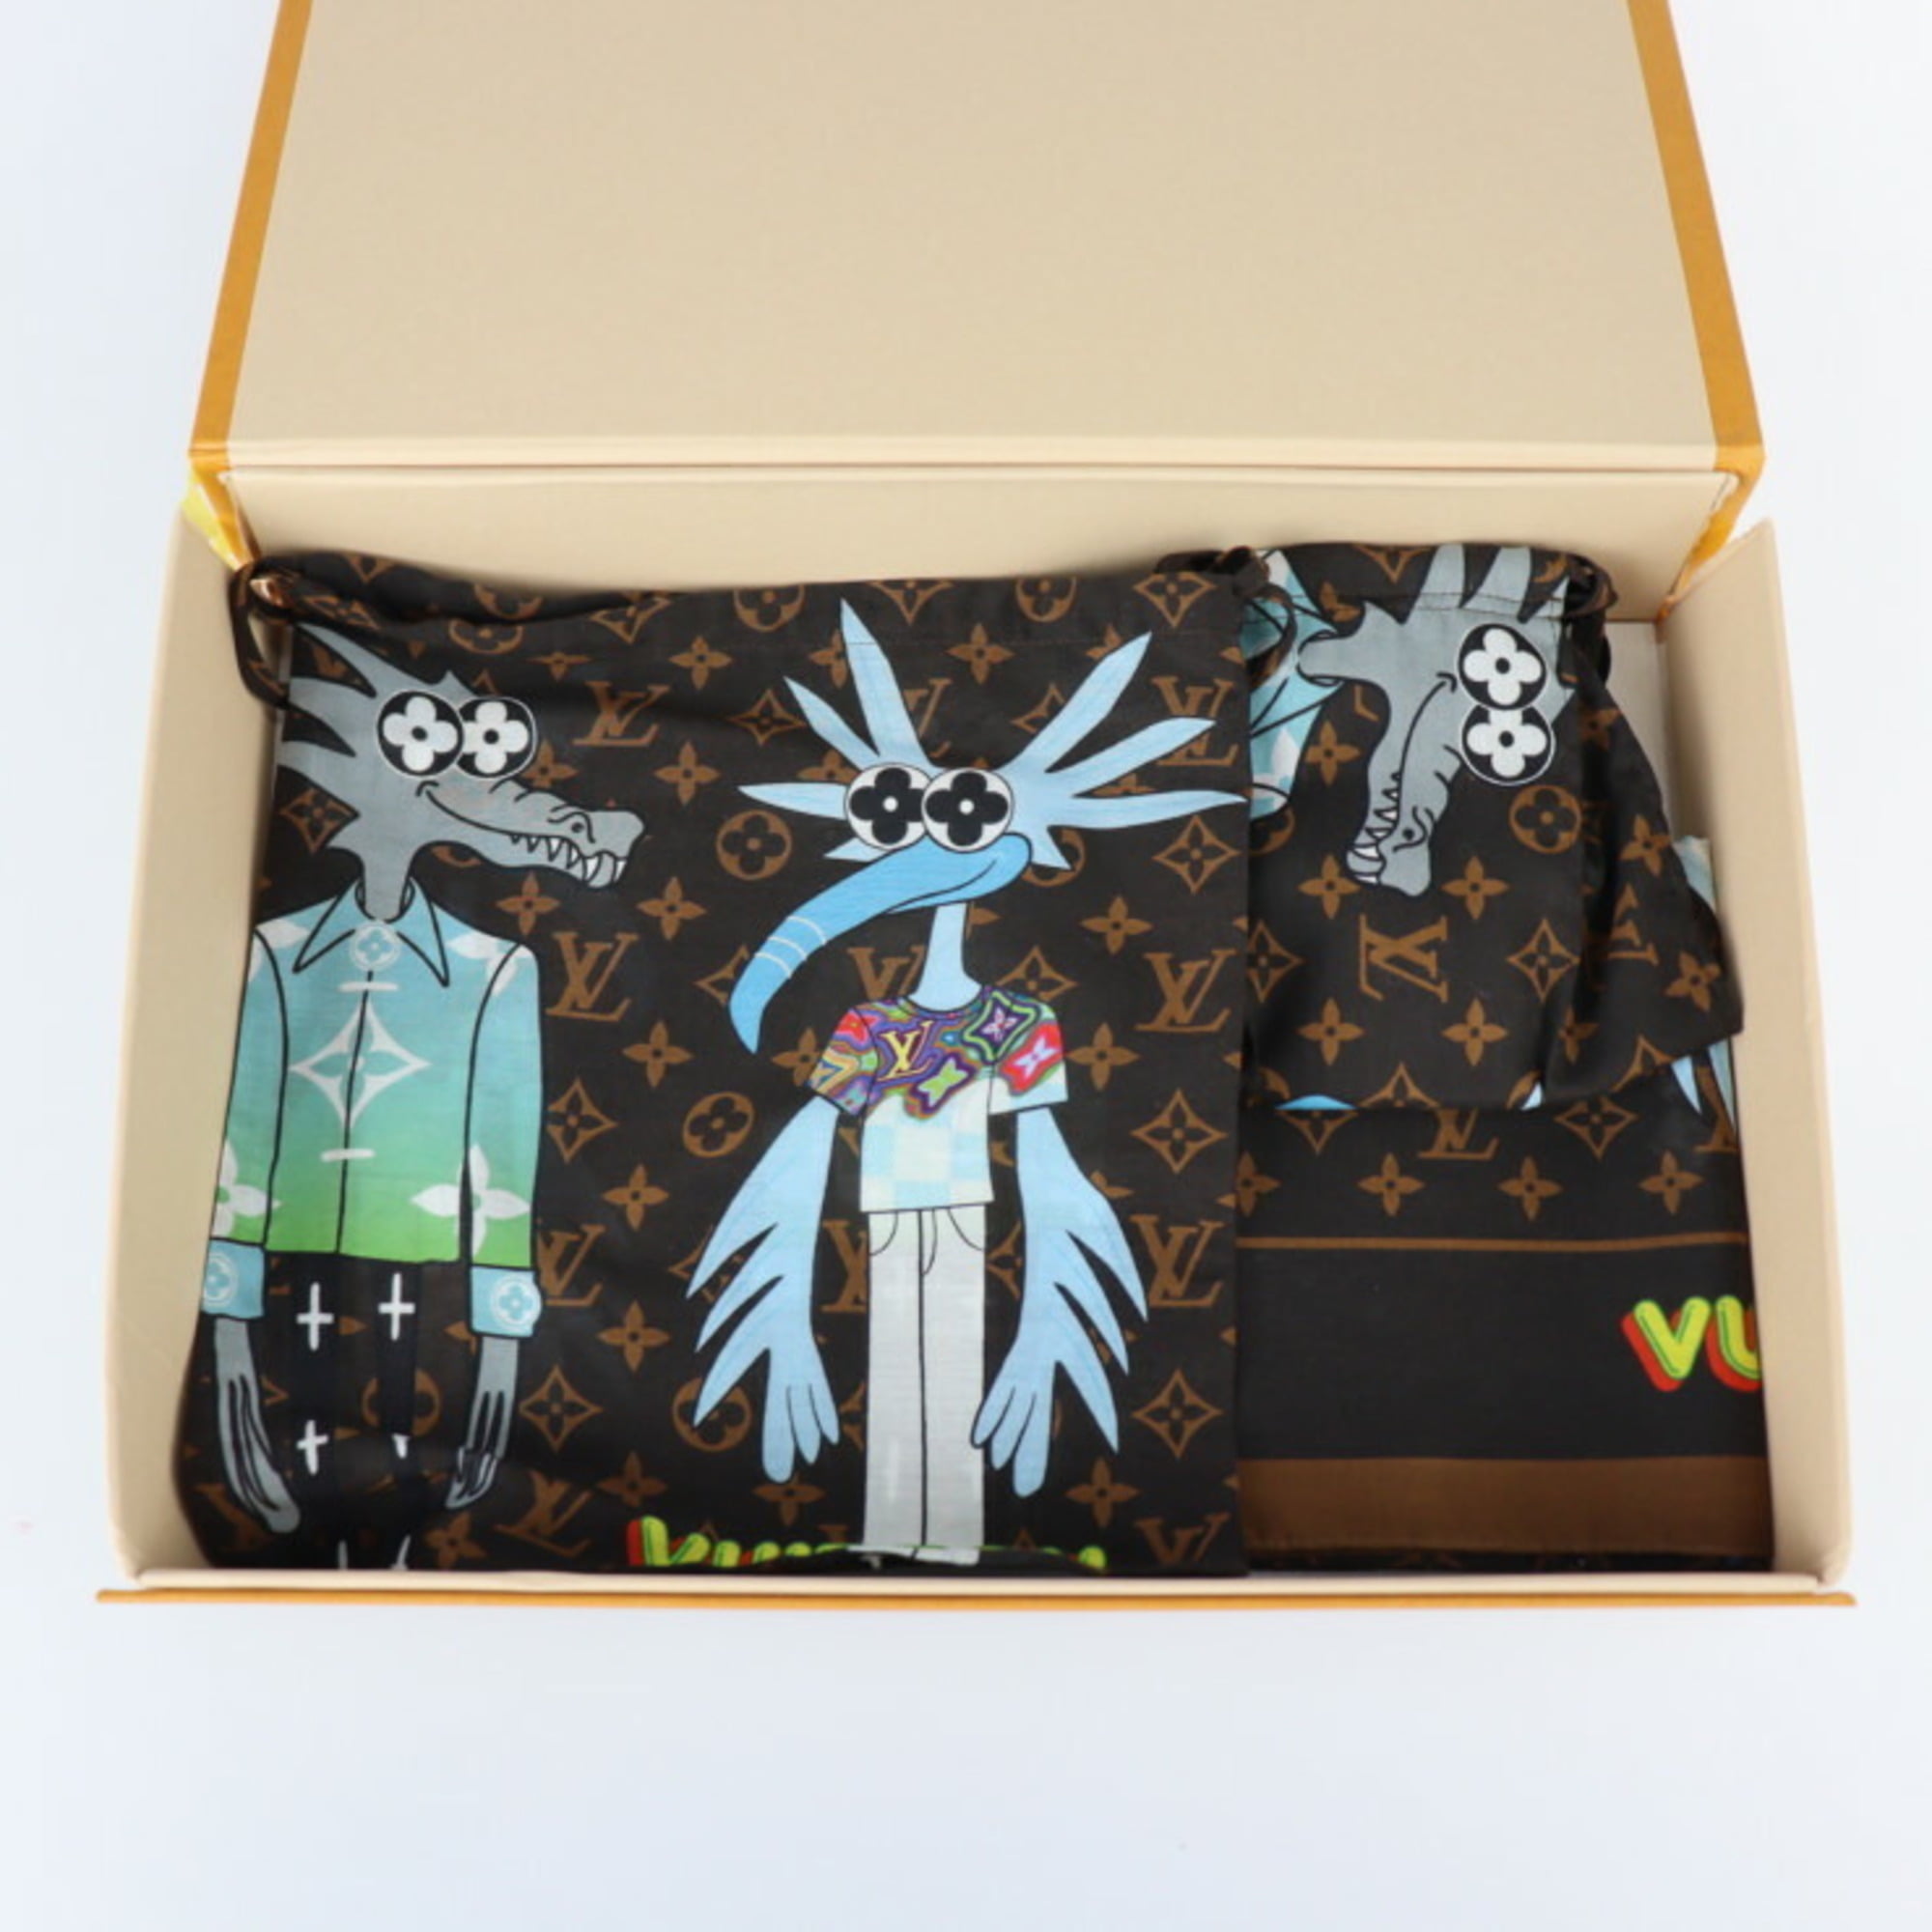 Louis Vuitton Monogram Tapestry Bandana & Mask Cover Set